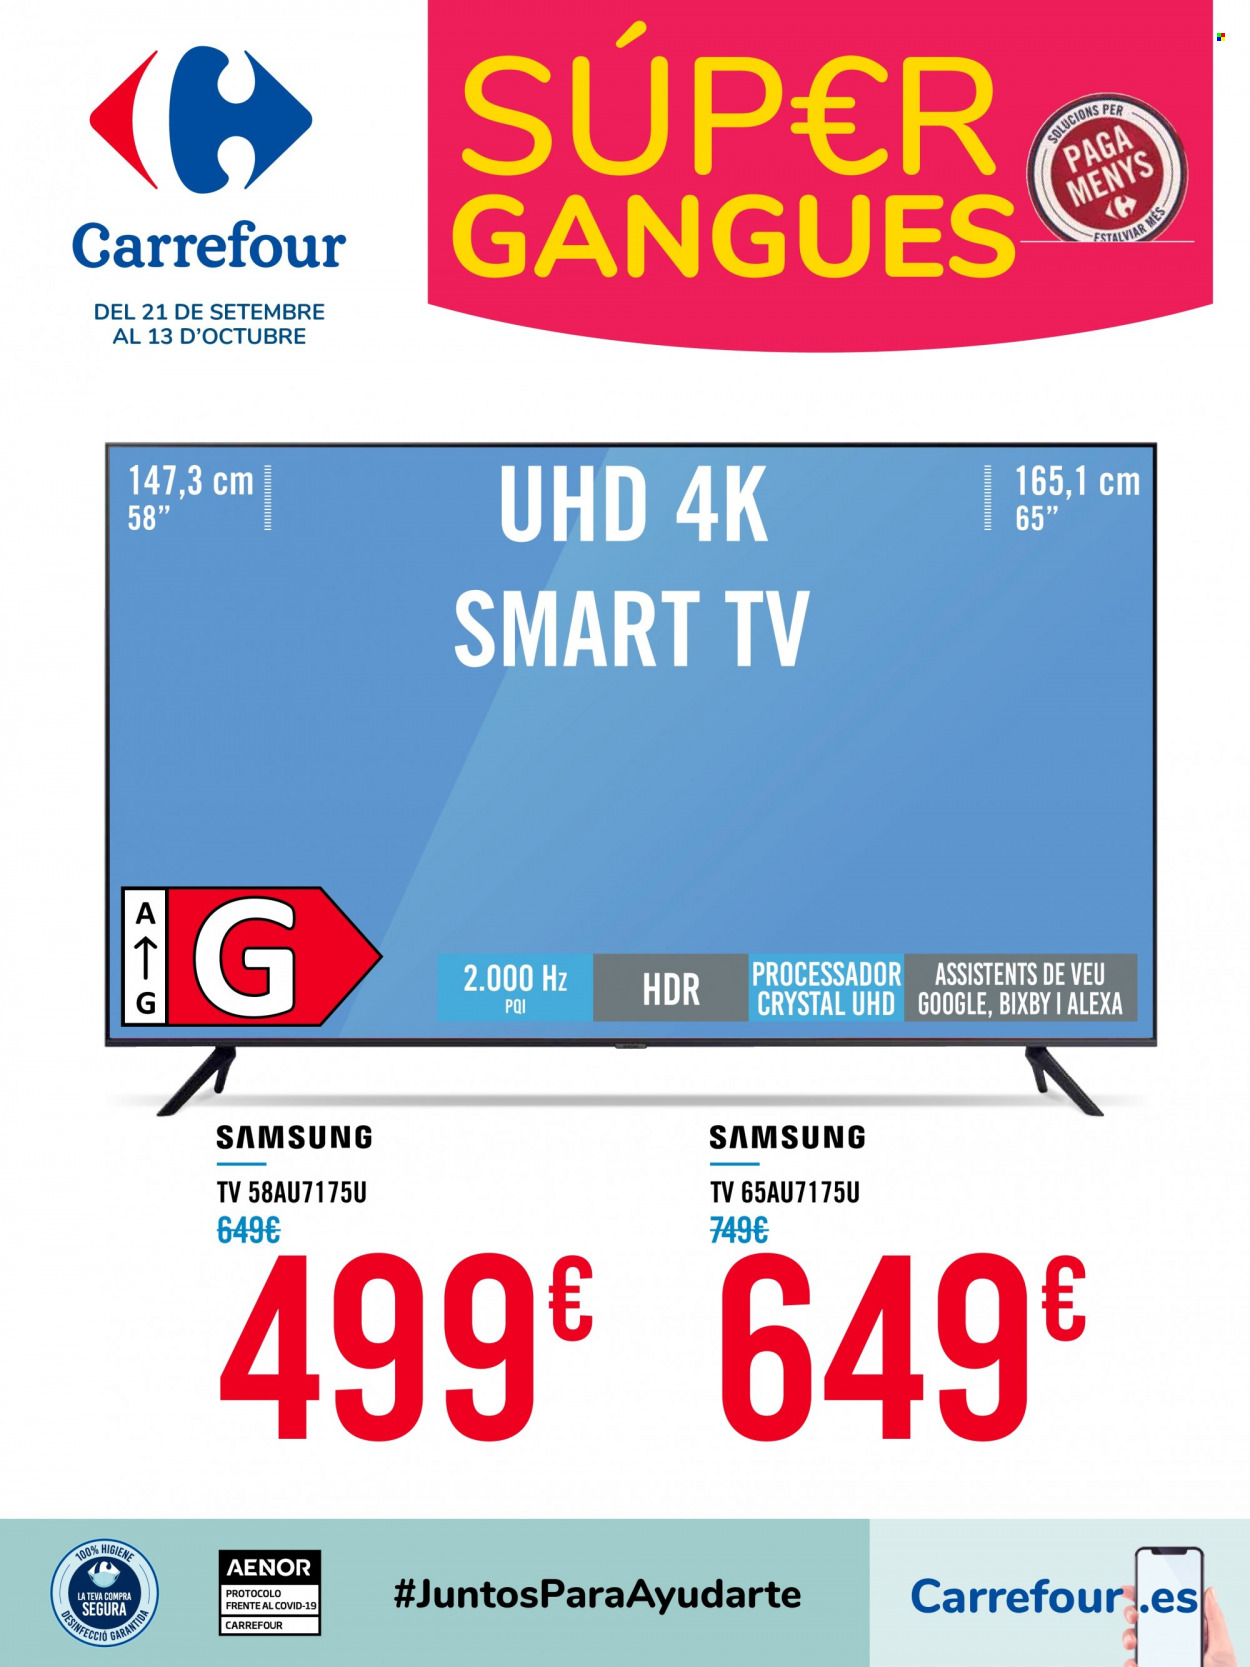 thumbnail - Folleto actual Carrefour - 21/09/21 - 13/10/21 - Ventas - Samsung, Smart TV, televisor. Página 1.